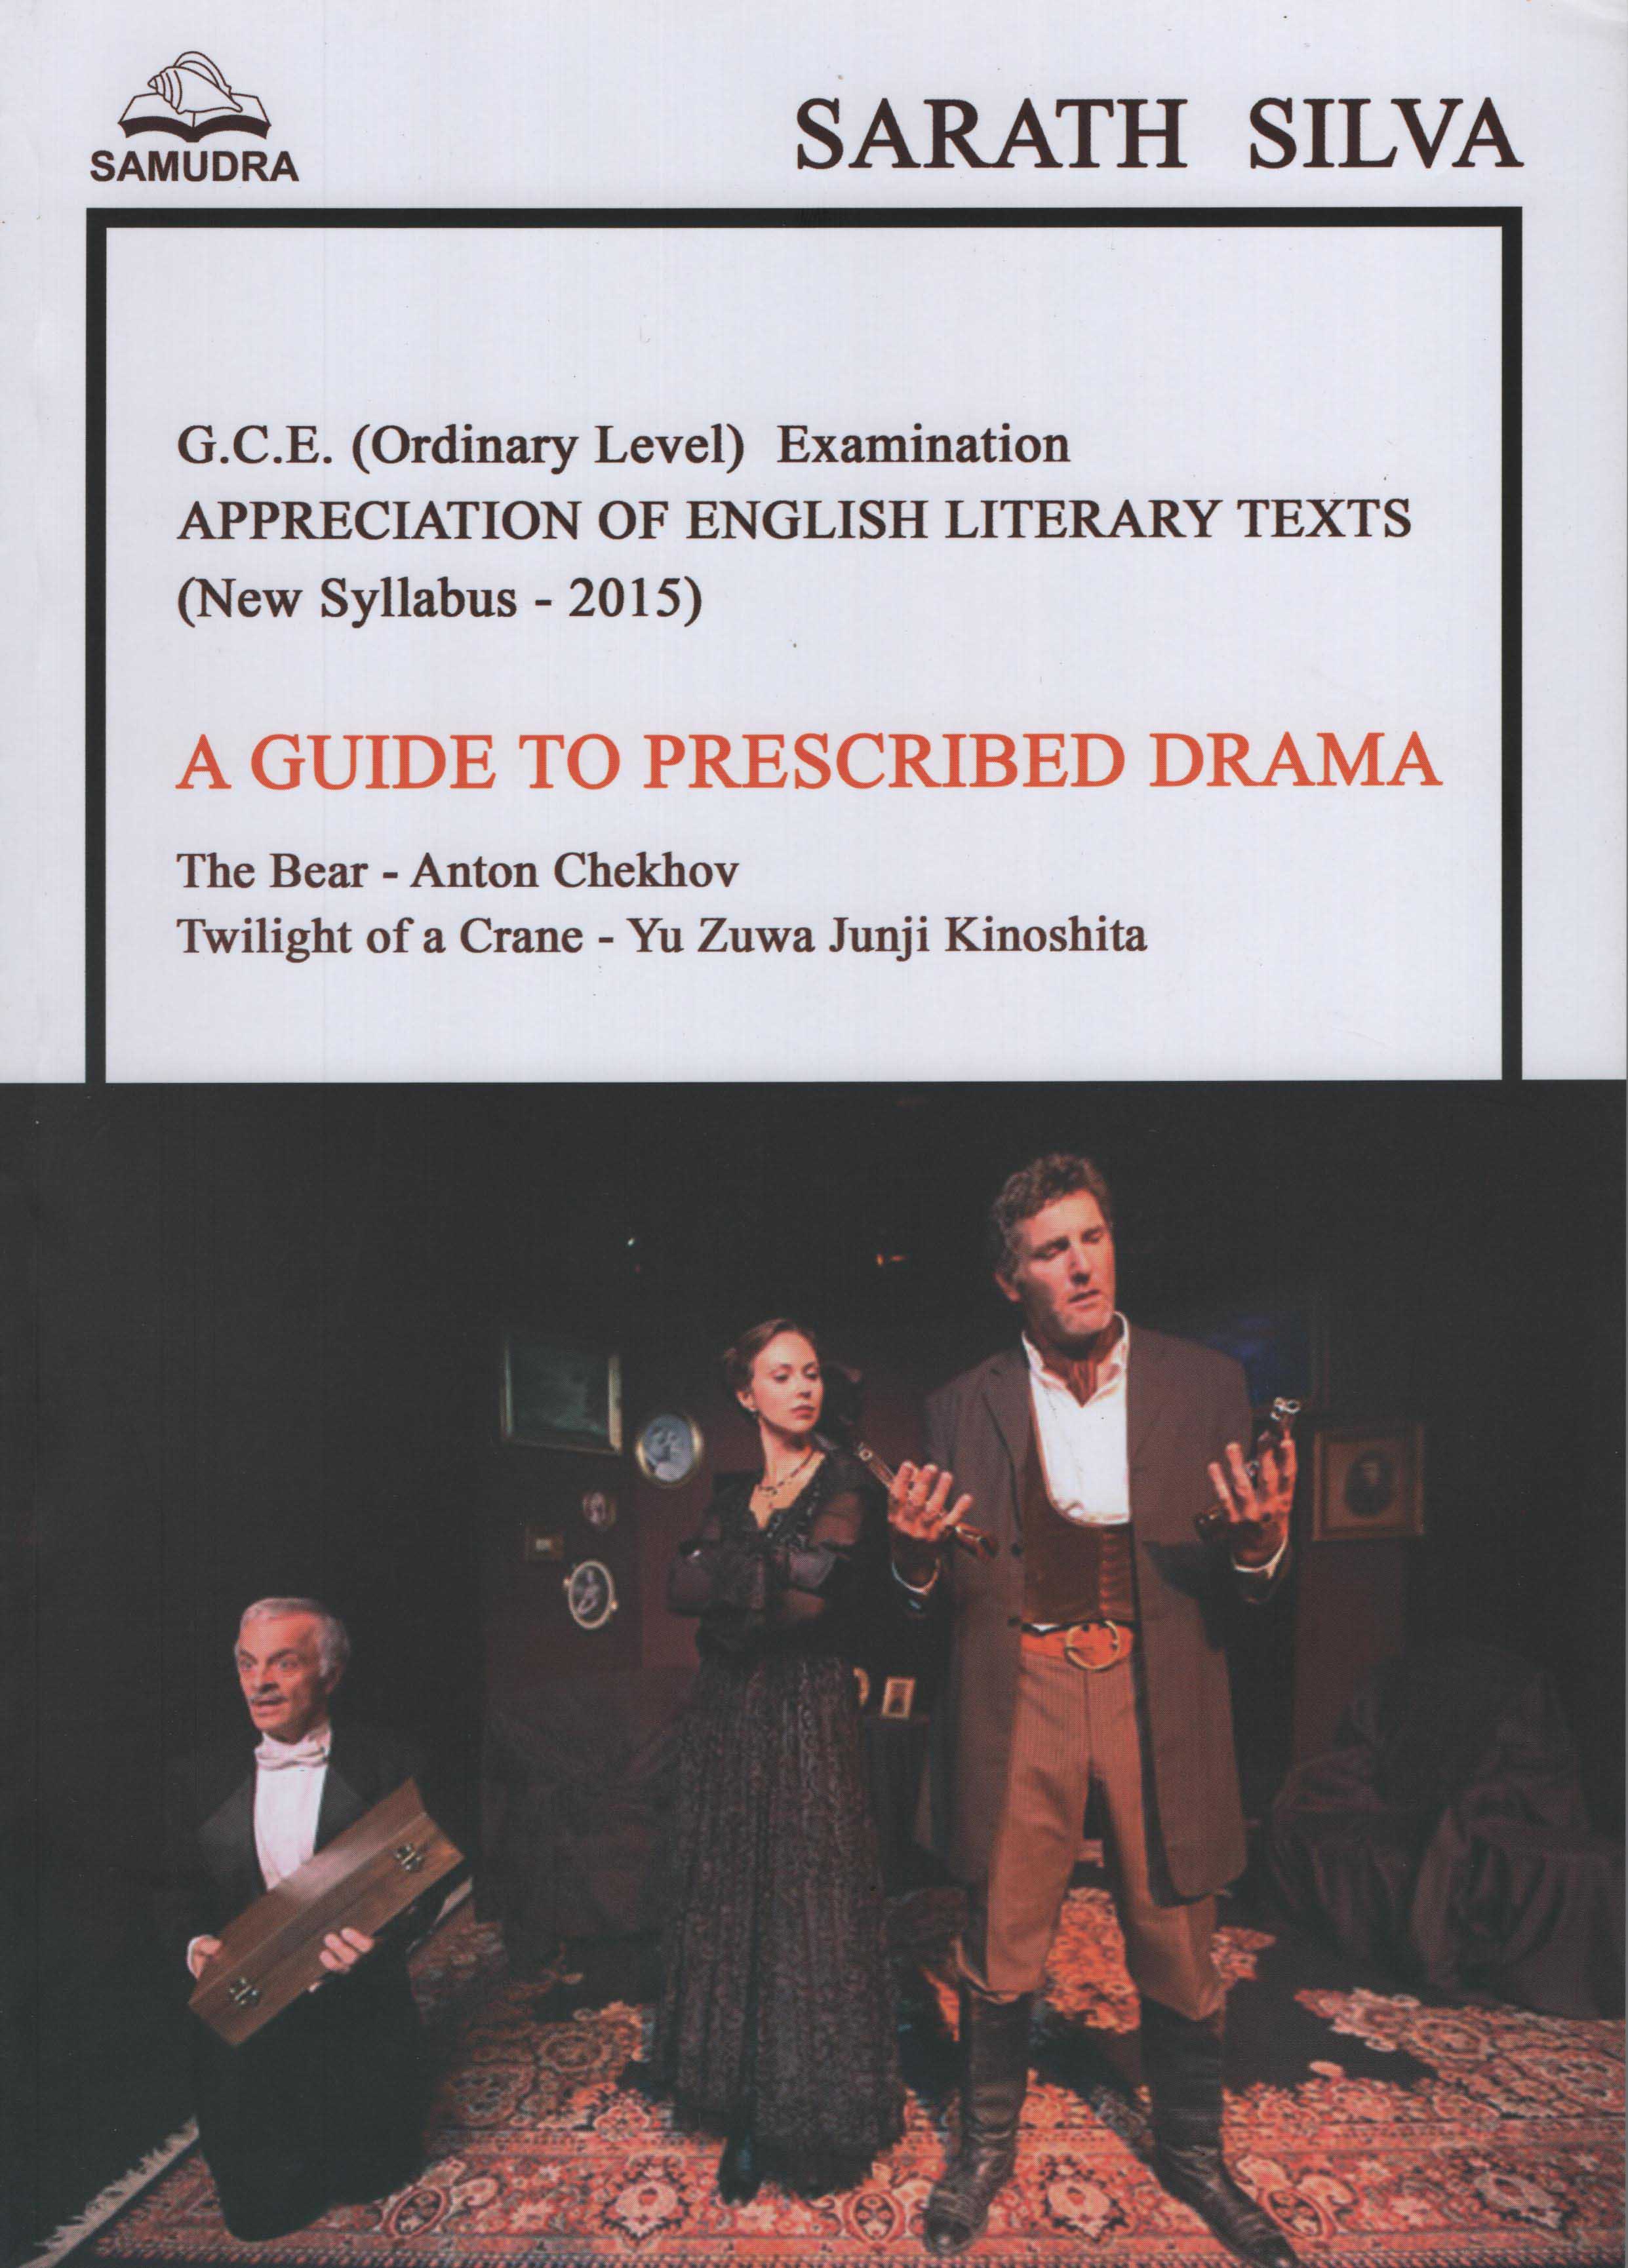 O/L Examination Appreciation of English Literary Texts A Guide to Prescribed Drama (New Syllabus - 2015)